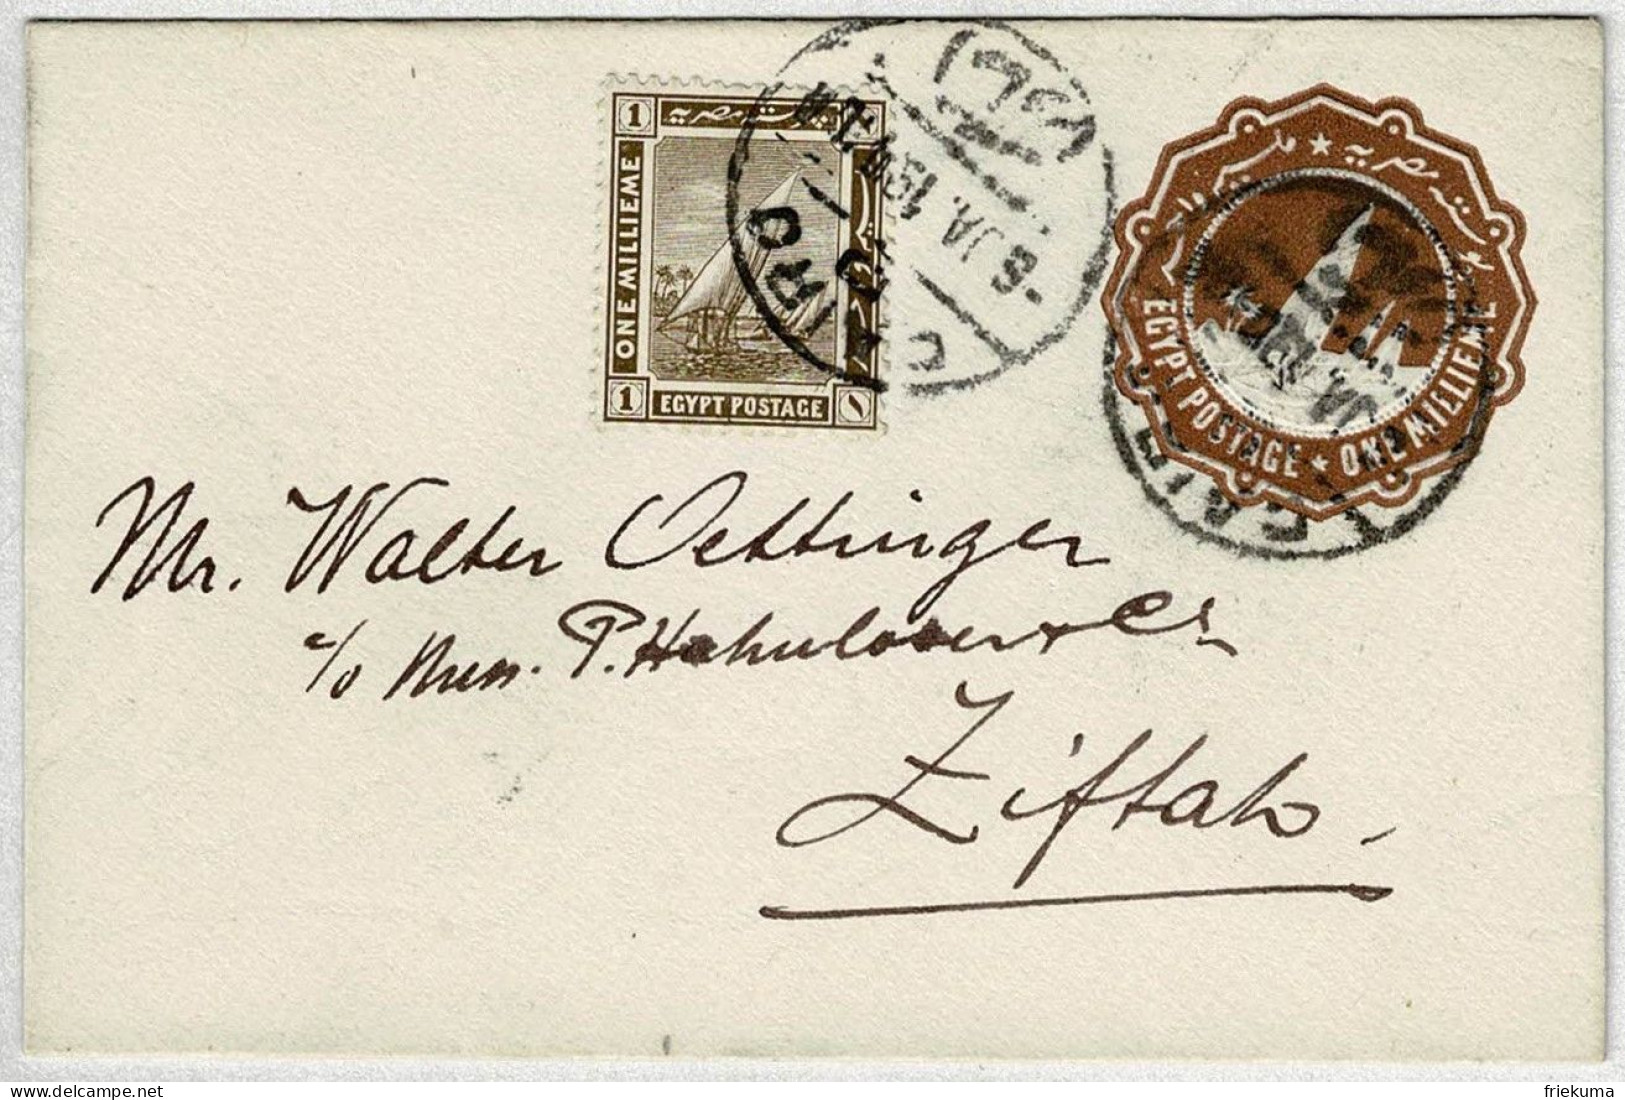 Aegypten / Egypt Postage 1919, Ganzsachen-Brief / Stationery Cairo - Zifta, Segelboote / Sailing Boats - 1915-1921 Protettorato Britannico